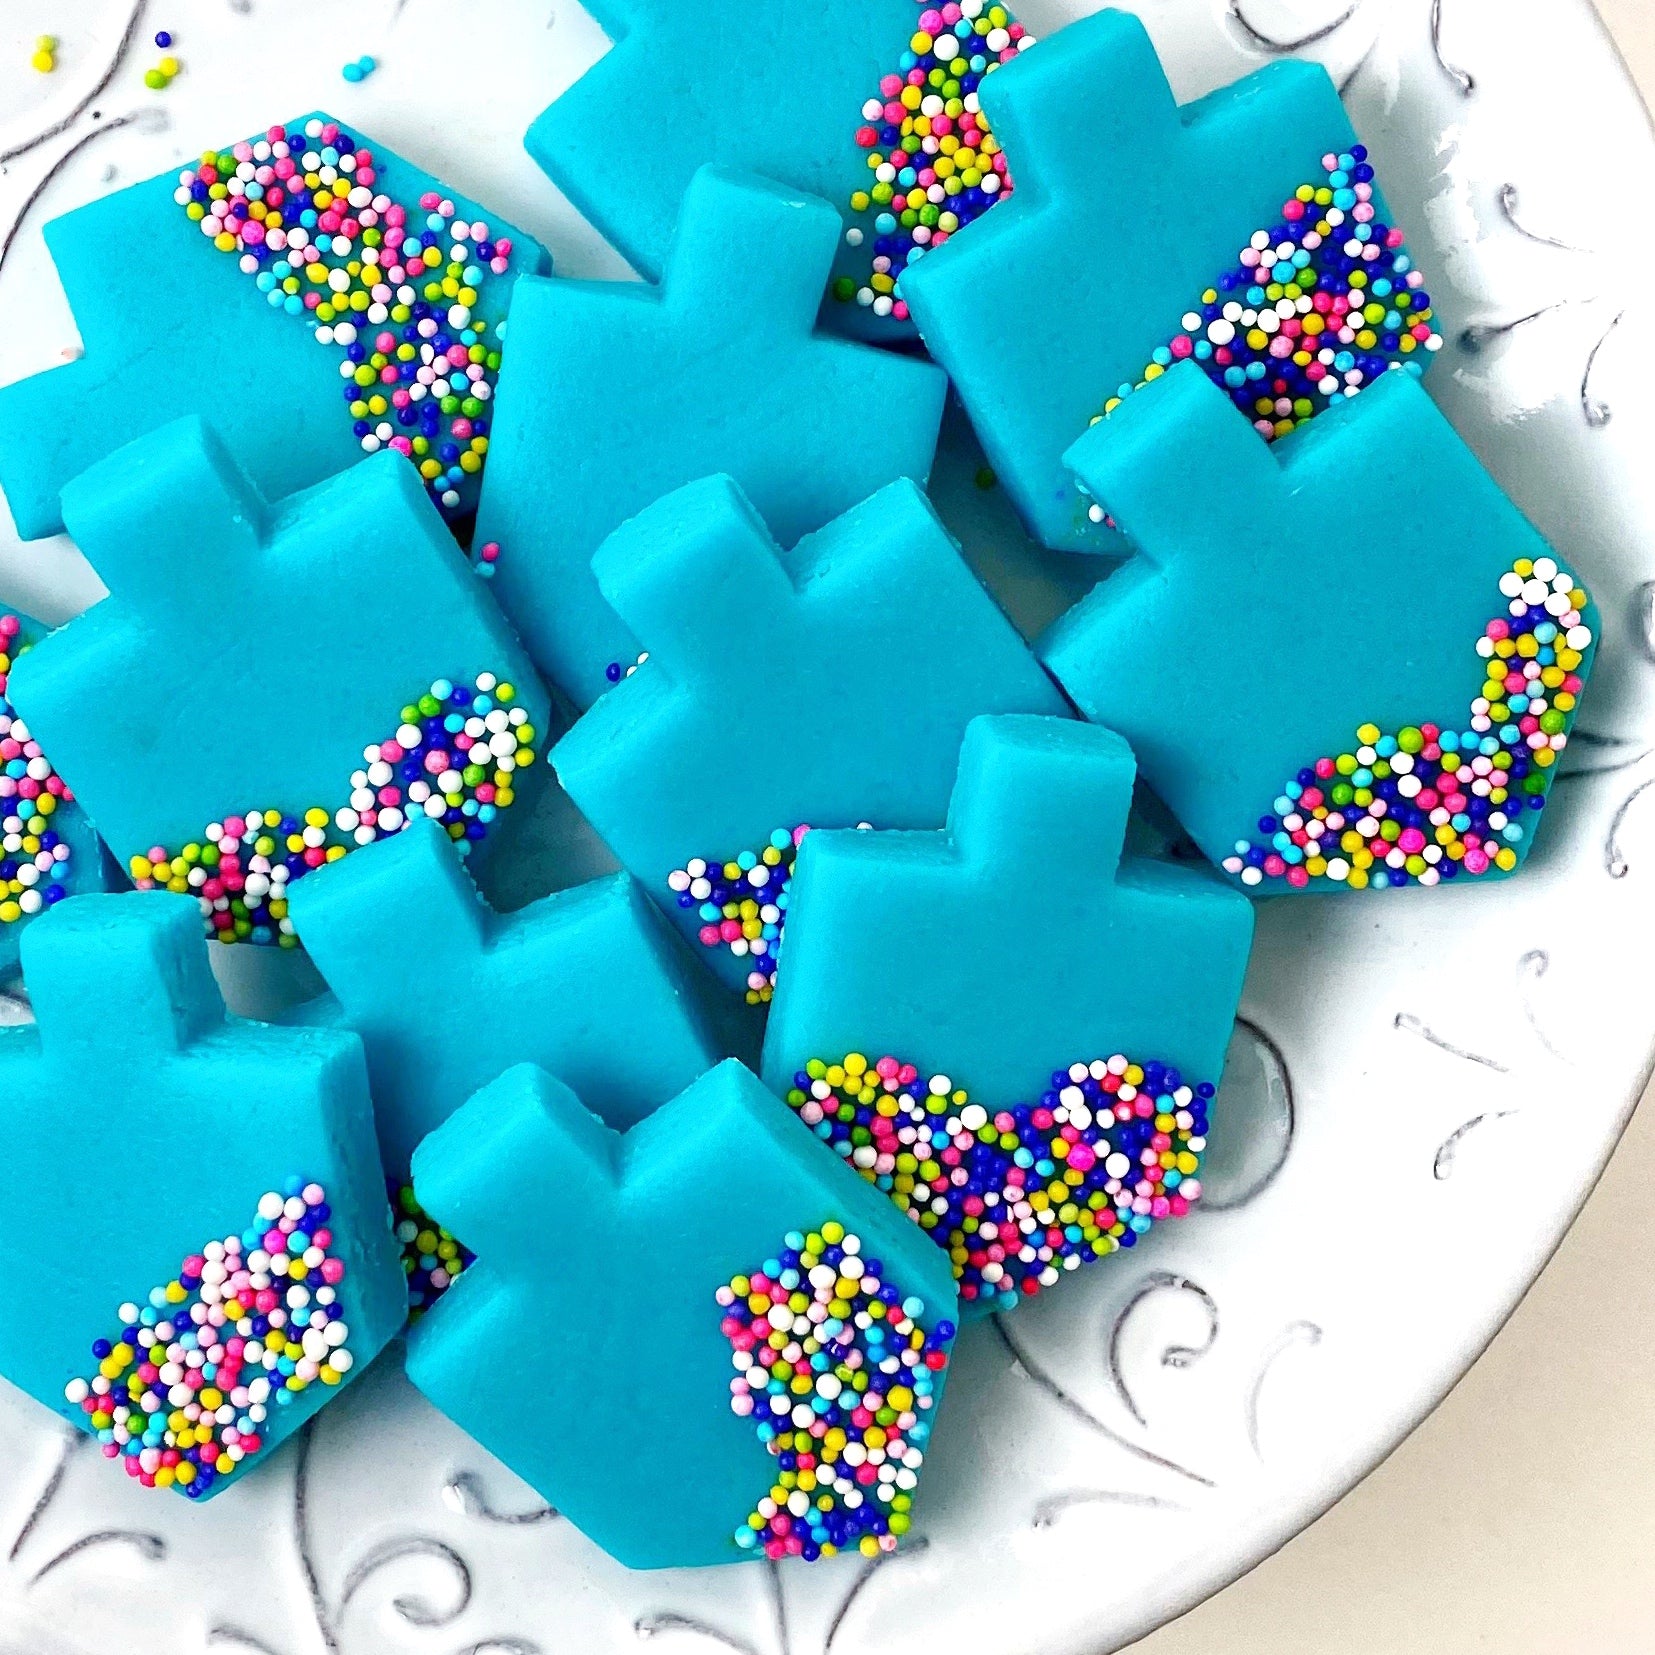 Hanukkah aqua blue sprinkle dreidels marzipan candy treats new close up